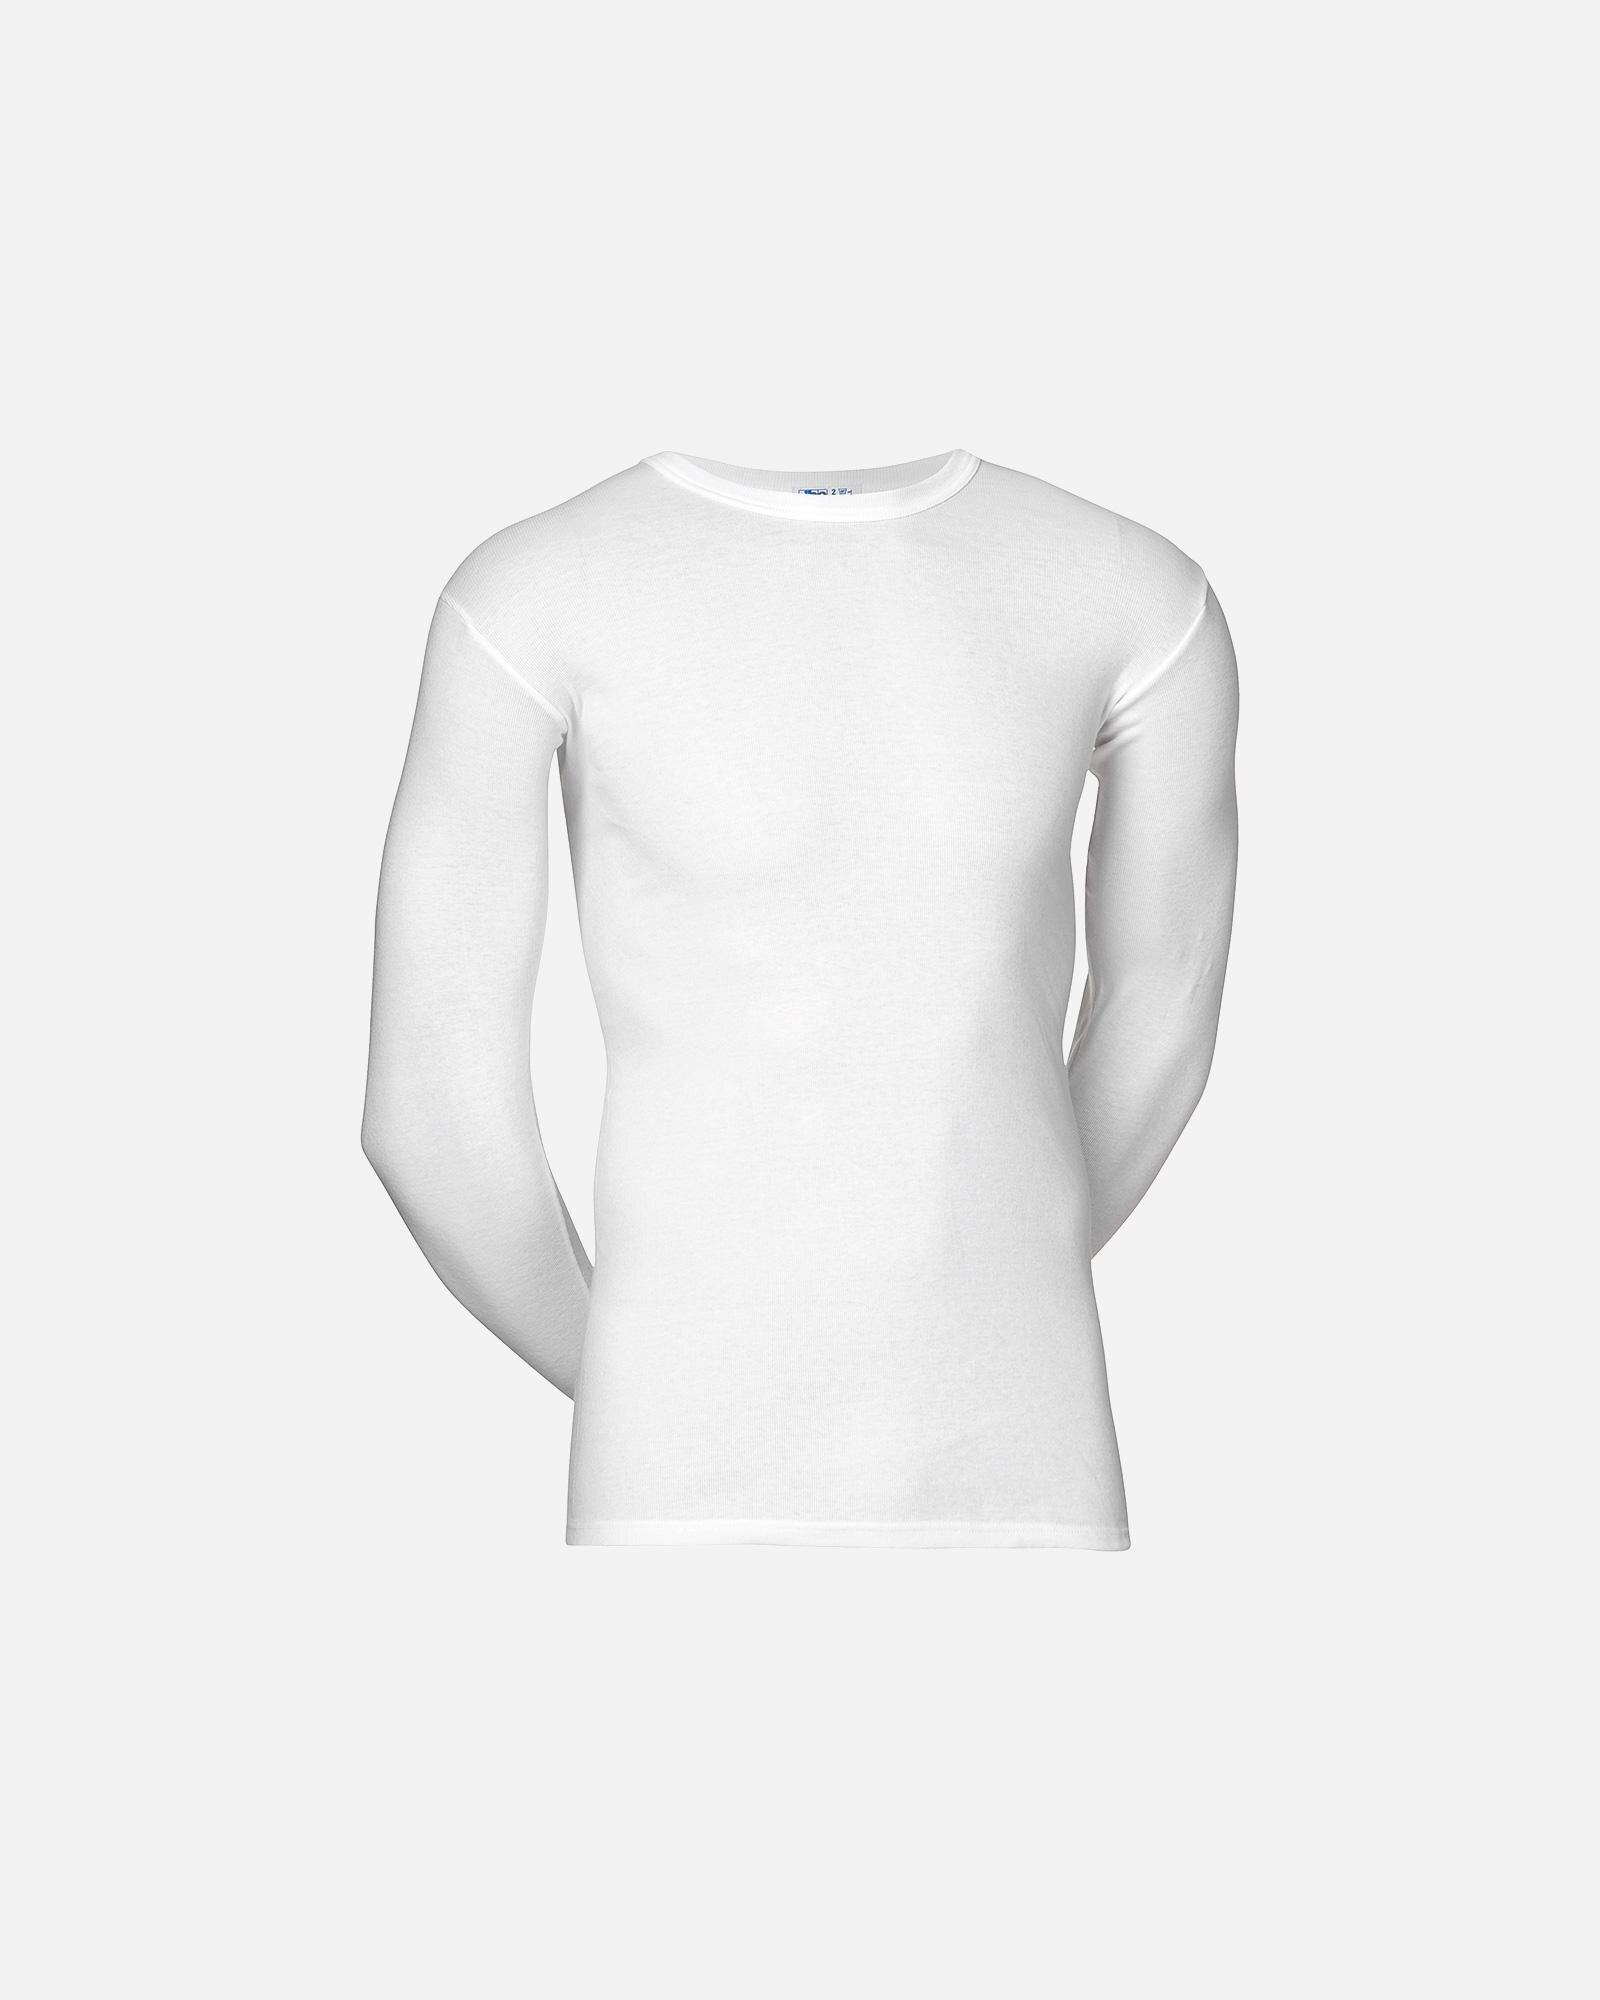 Fængsling dis i dag Original" langærmet t-shirt | 100% bomuld | hvid - JBS officiel shop